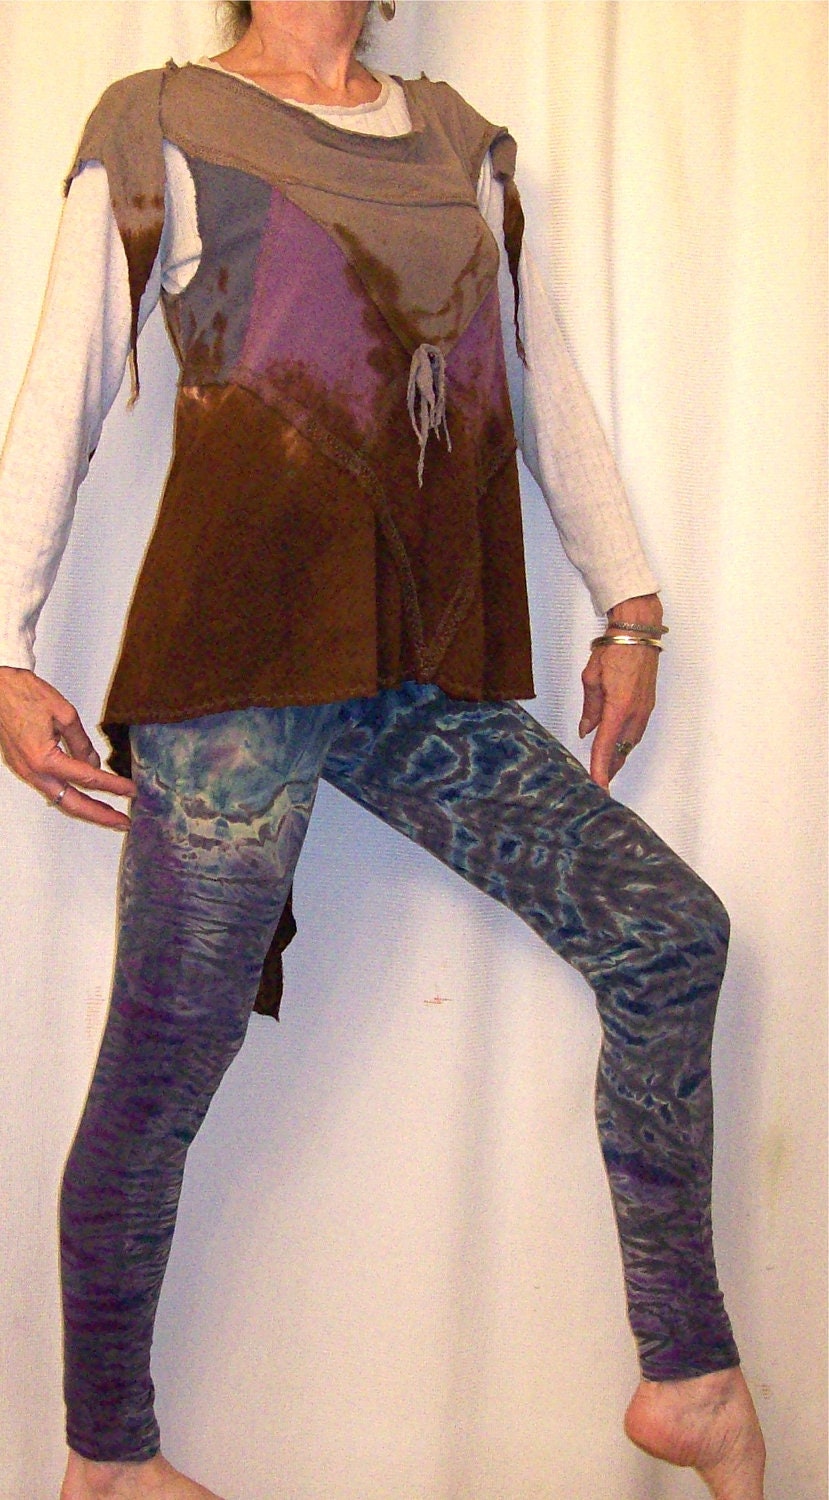 SALE Shibori Leggings Artfully Hand Dyed in Purple, Blue & Grey/Black, cotton w lycra, 28-35" waist size Large Womens